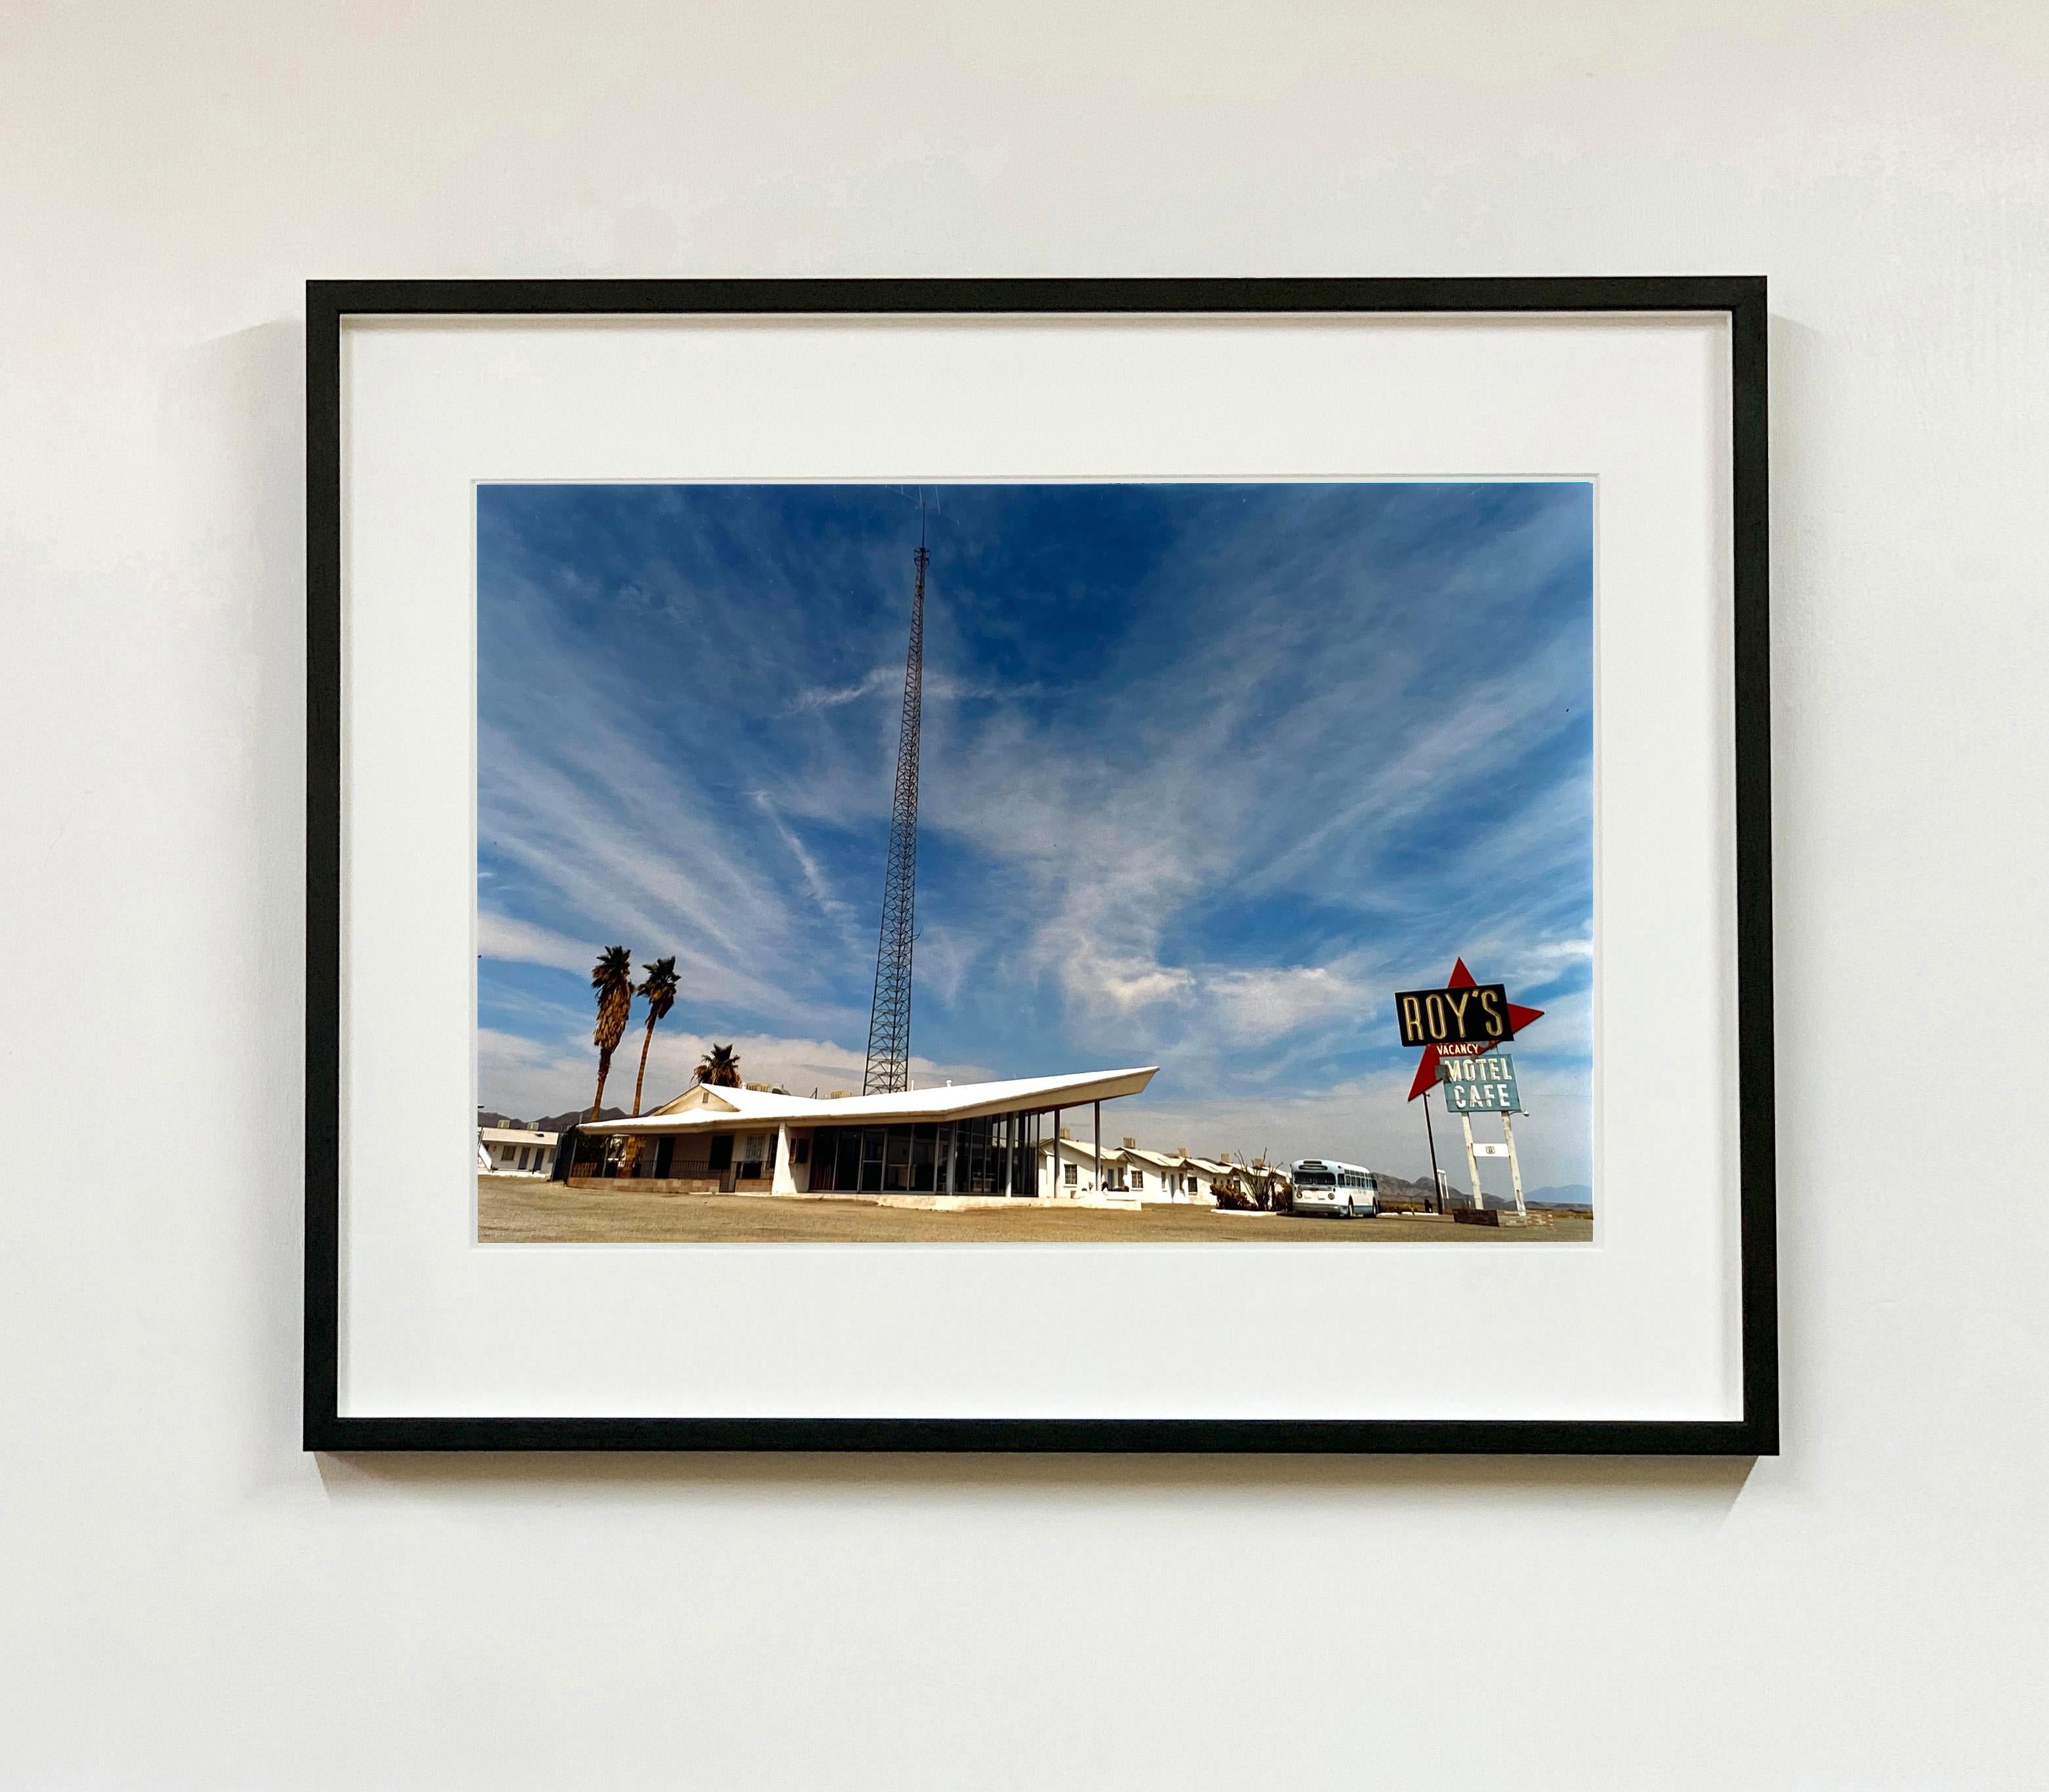 Roy's Motel Route 66, Amboy, California - Landscape Color Photo - Print by Richard Heeps